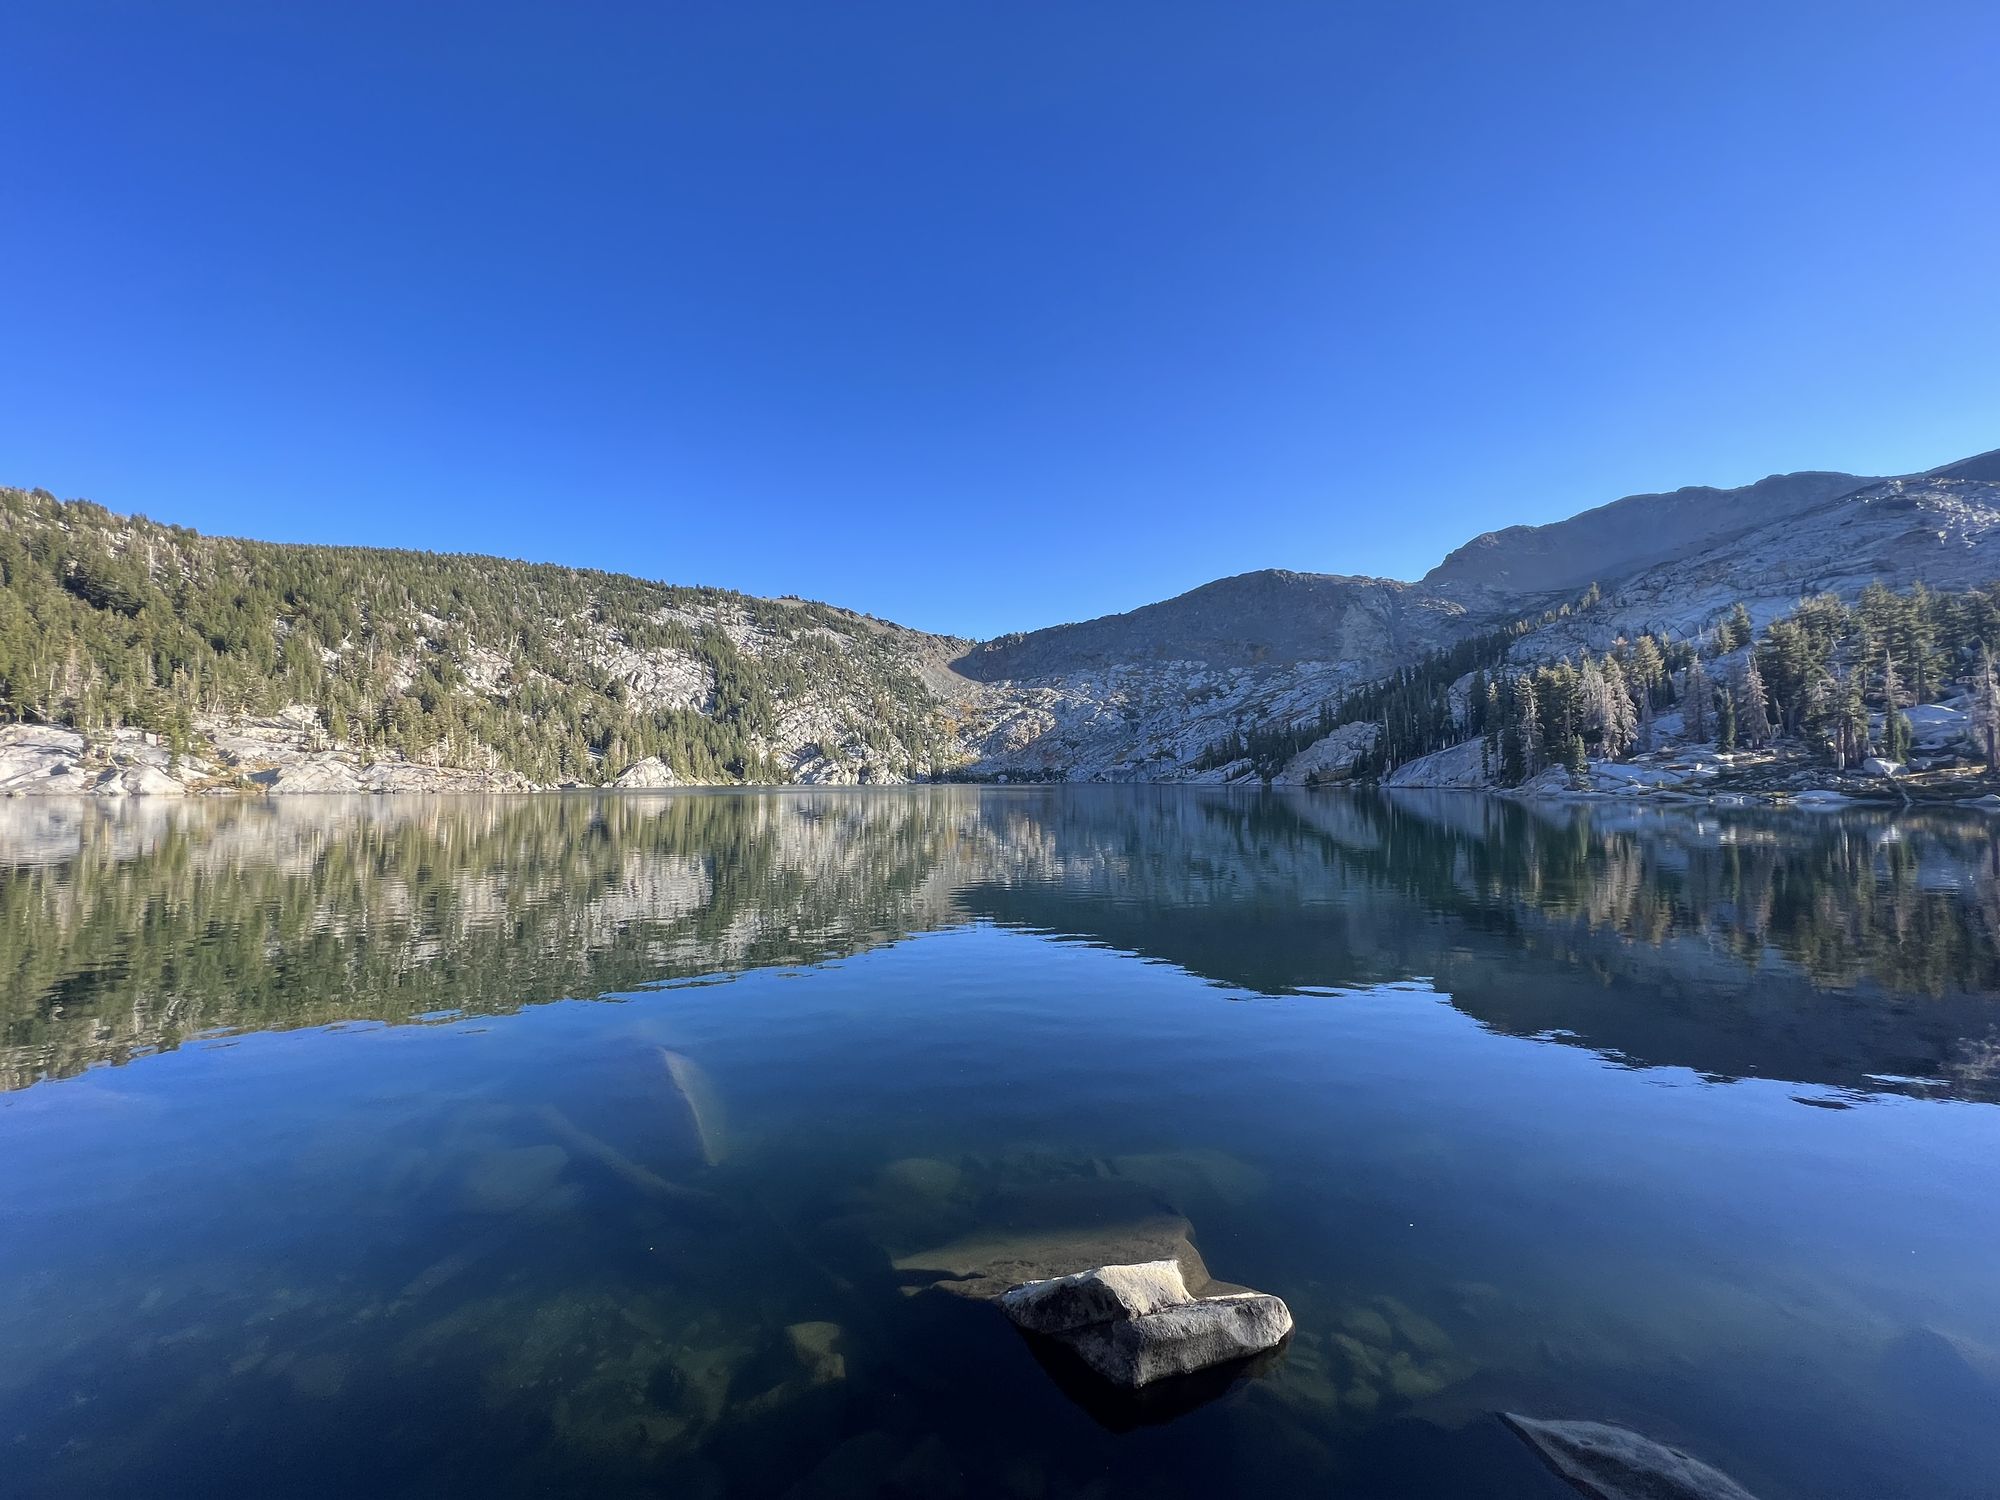 A still lake reflecting granite mountains.